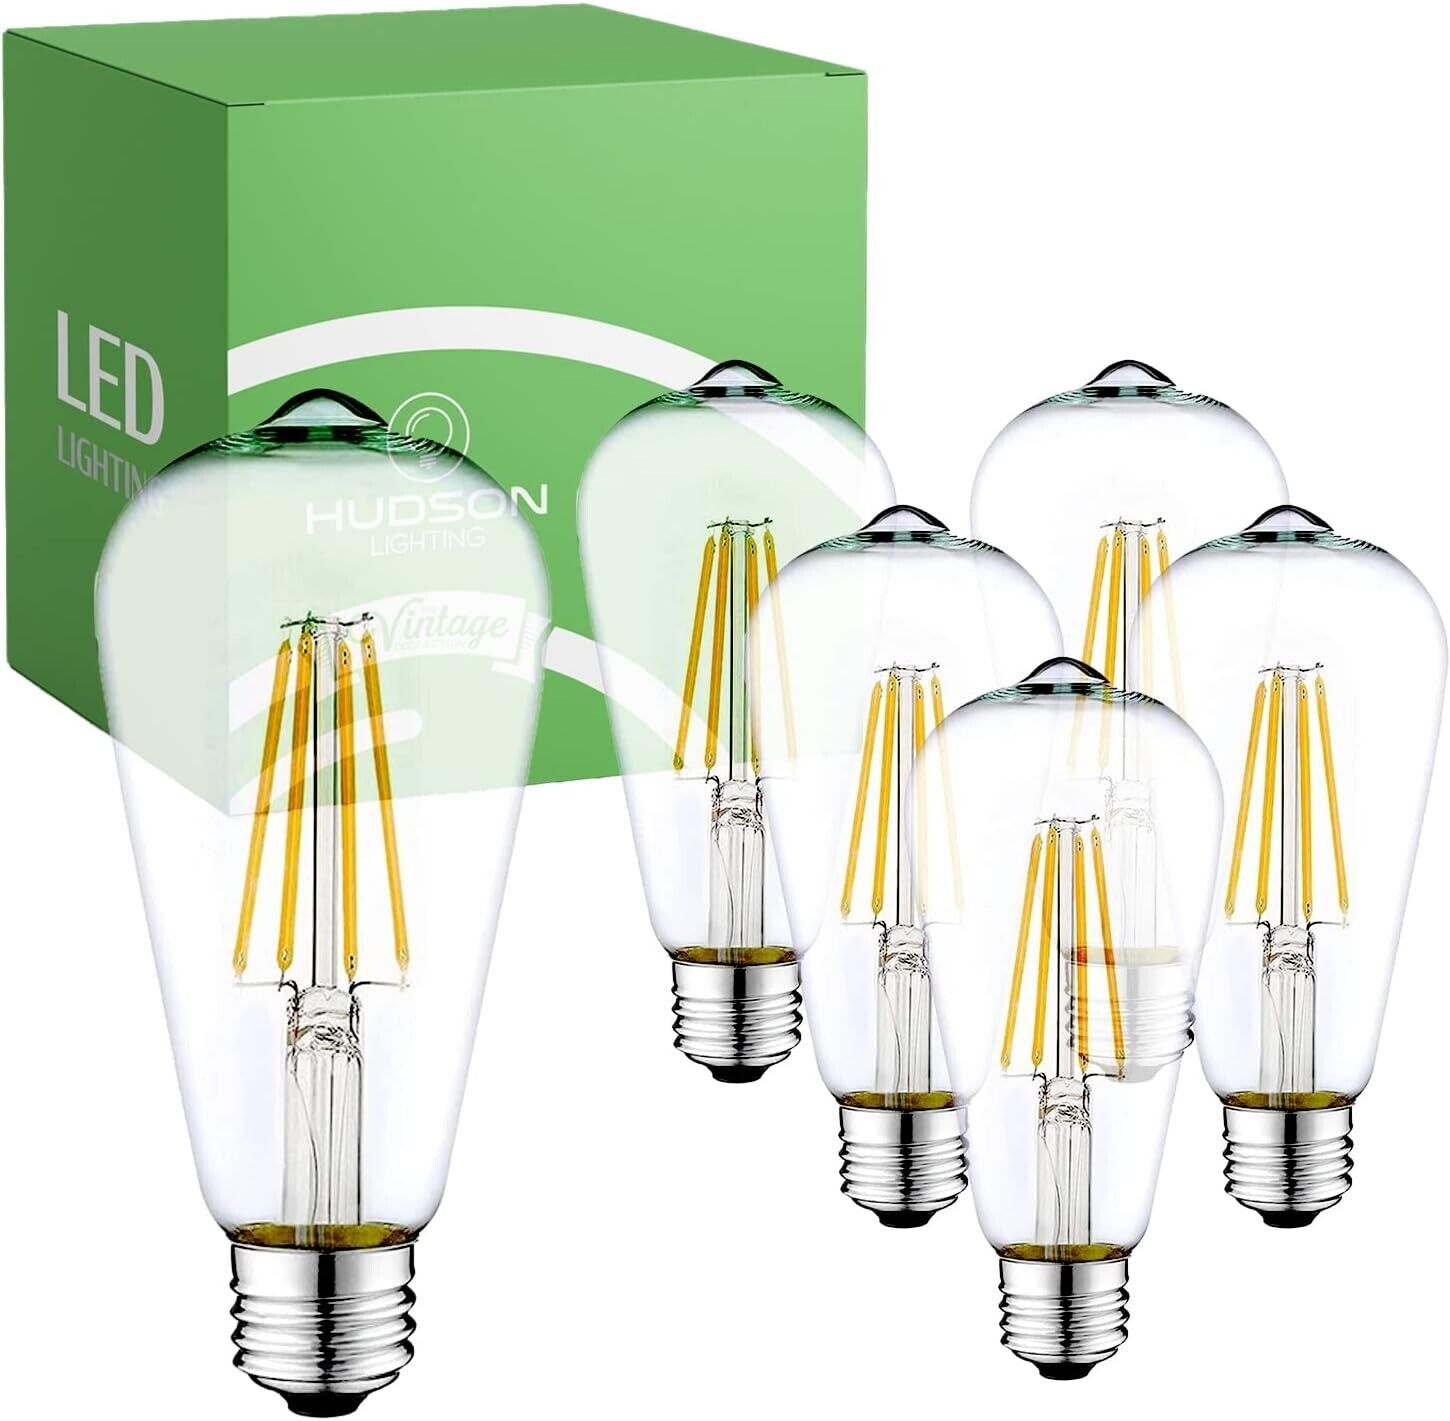 Hudson Vintage LED Edison Light Bulbs 60W (6 Pack)- E26/E27 Base 5000K Dimmable